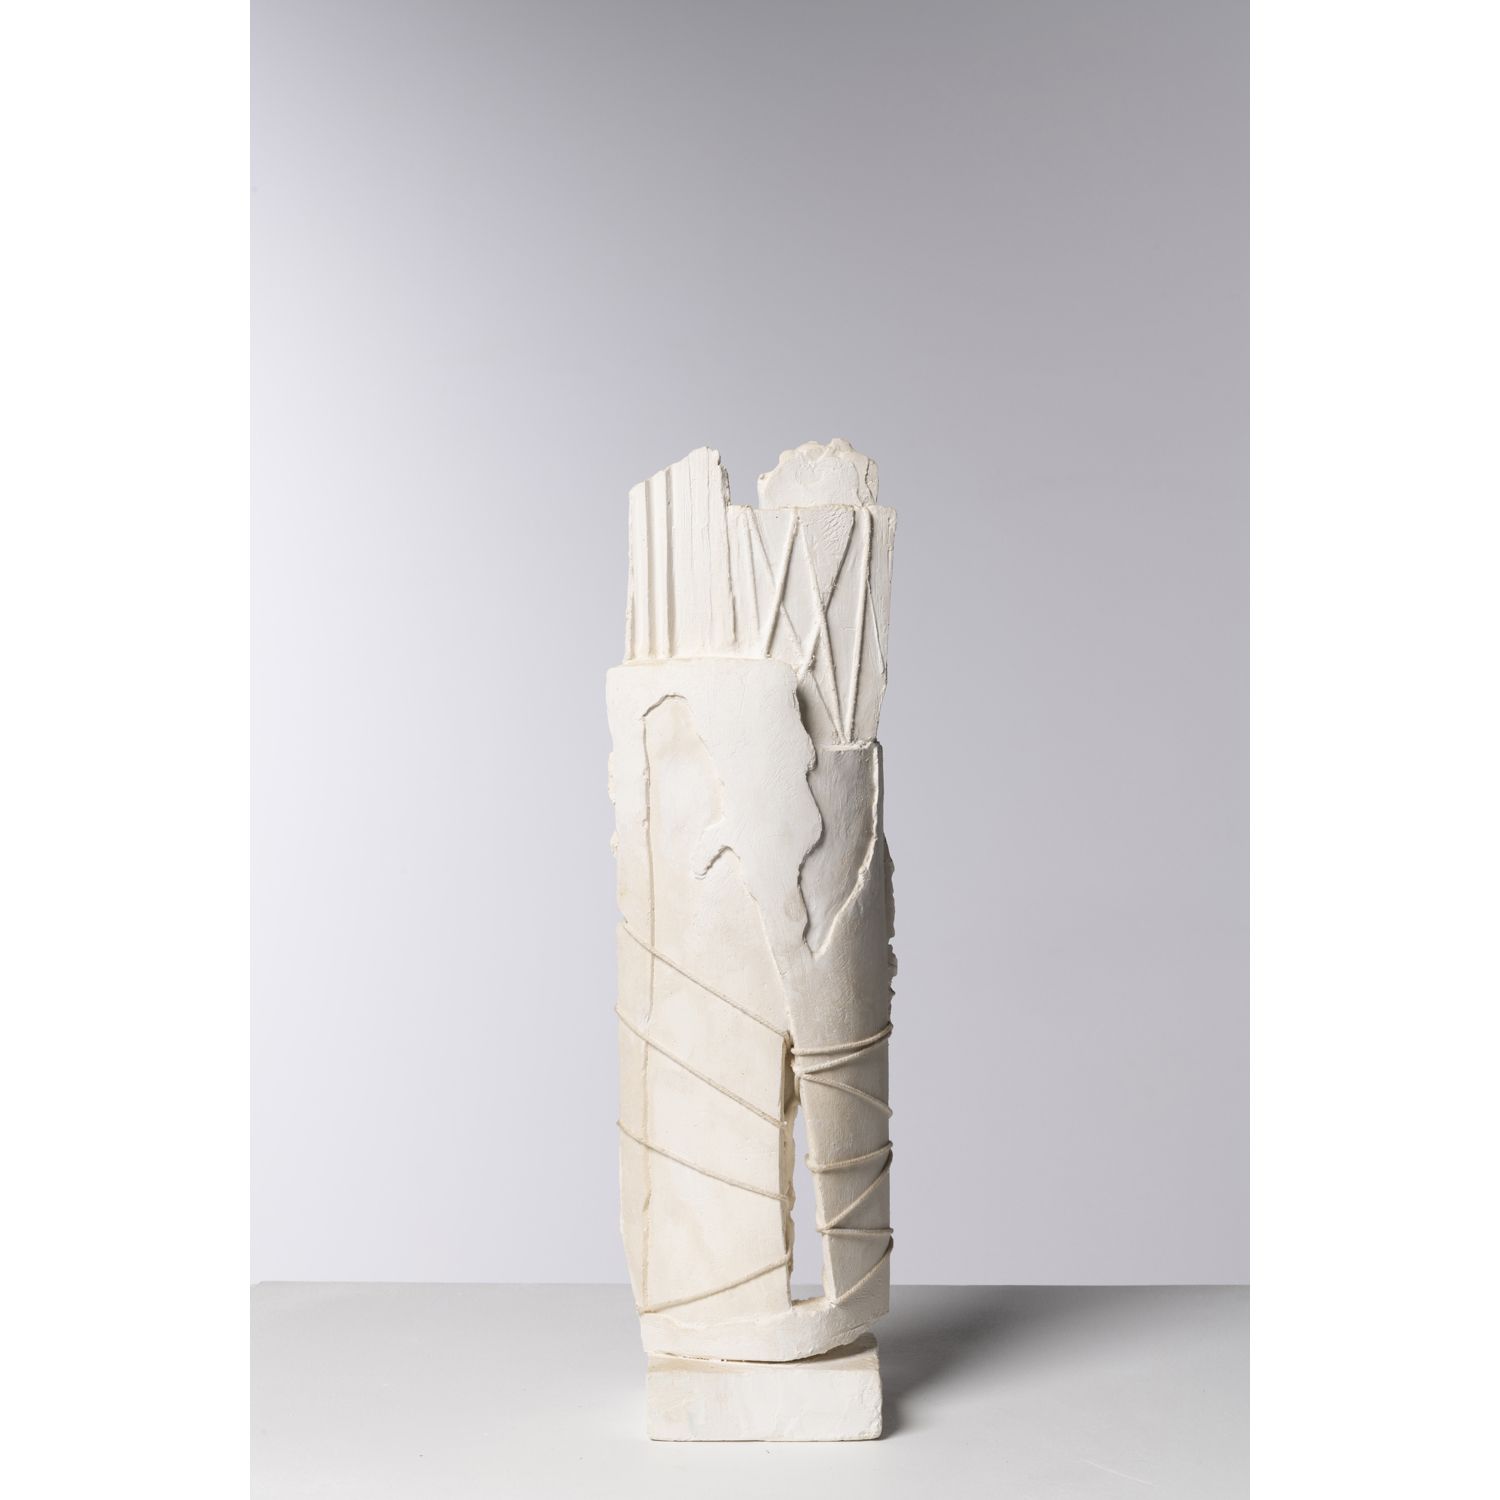 Viviane Hayez (1930-2017) Sculpture 维维安-哈耶兹（1930-2017）

雕塑

石膏和棉线

底座下有签名 "V.Hay&hellip;